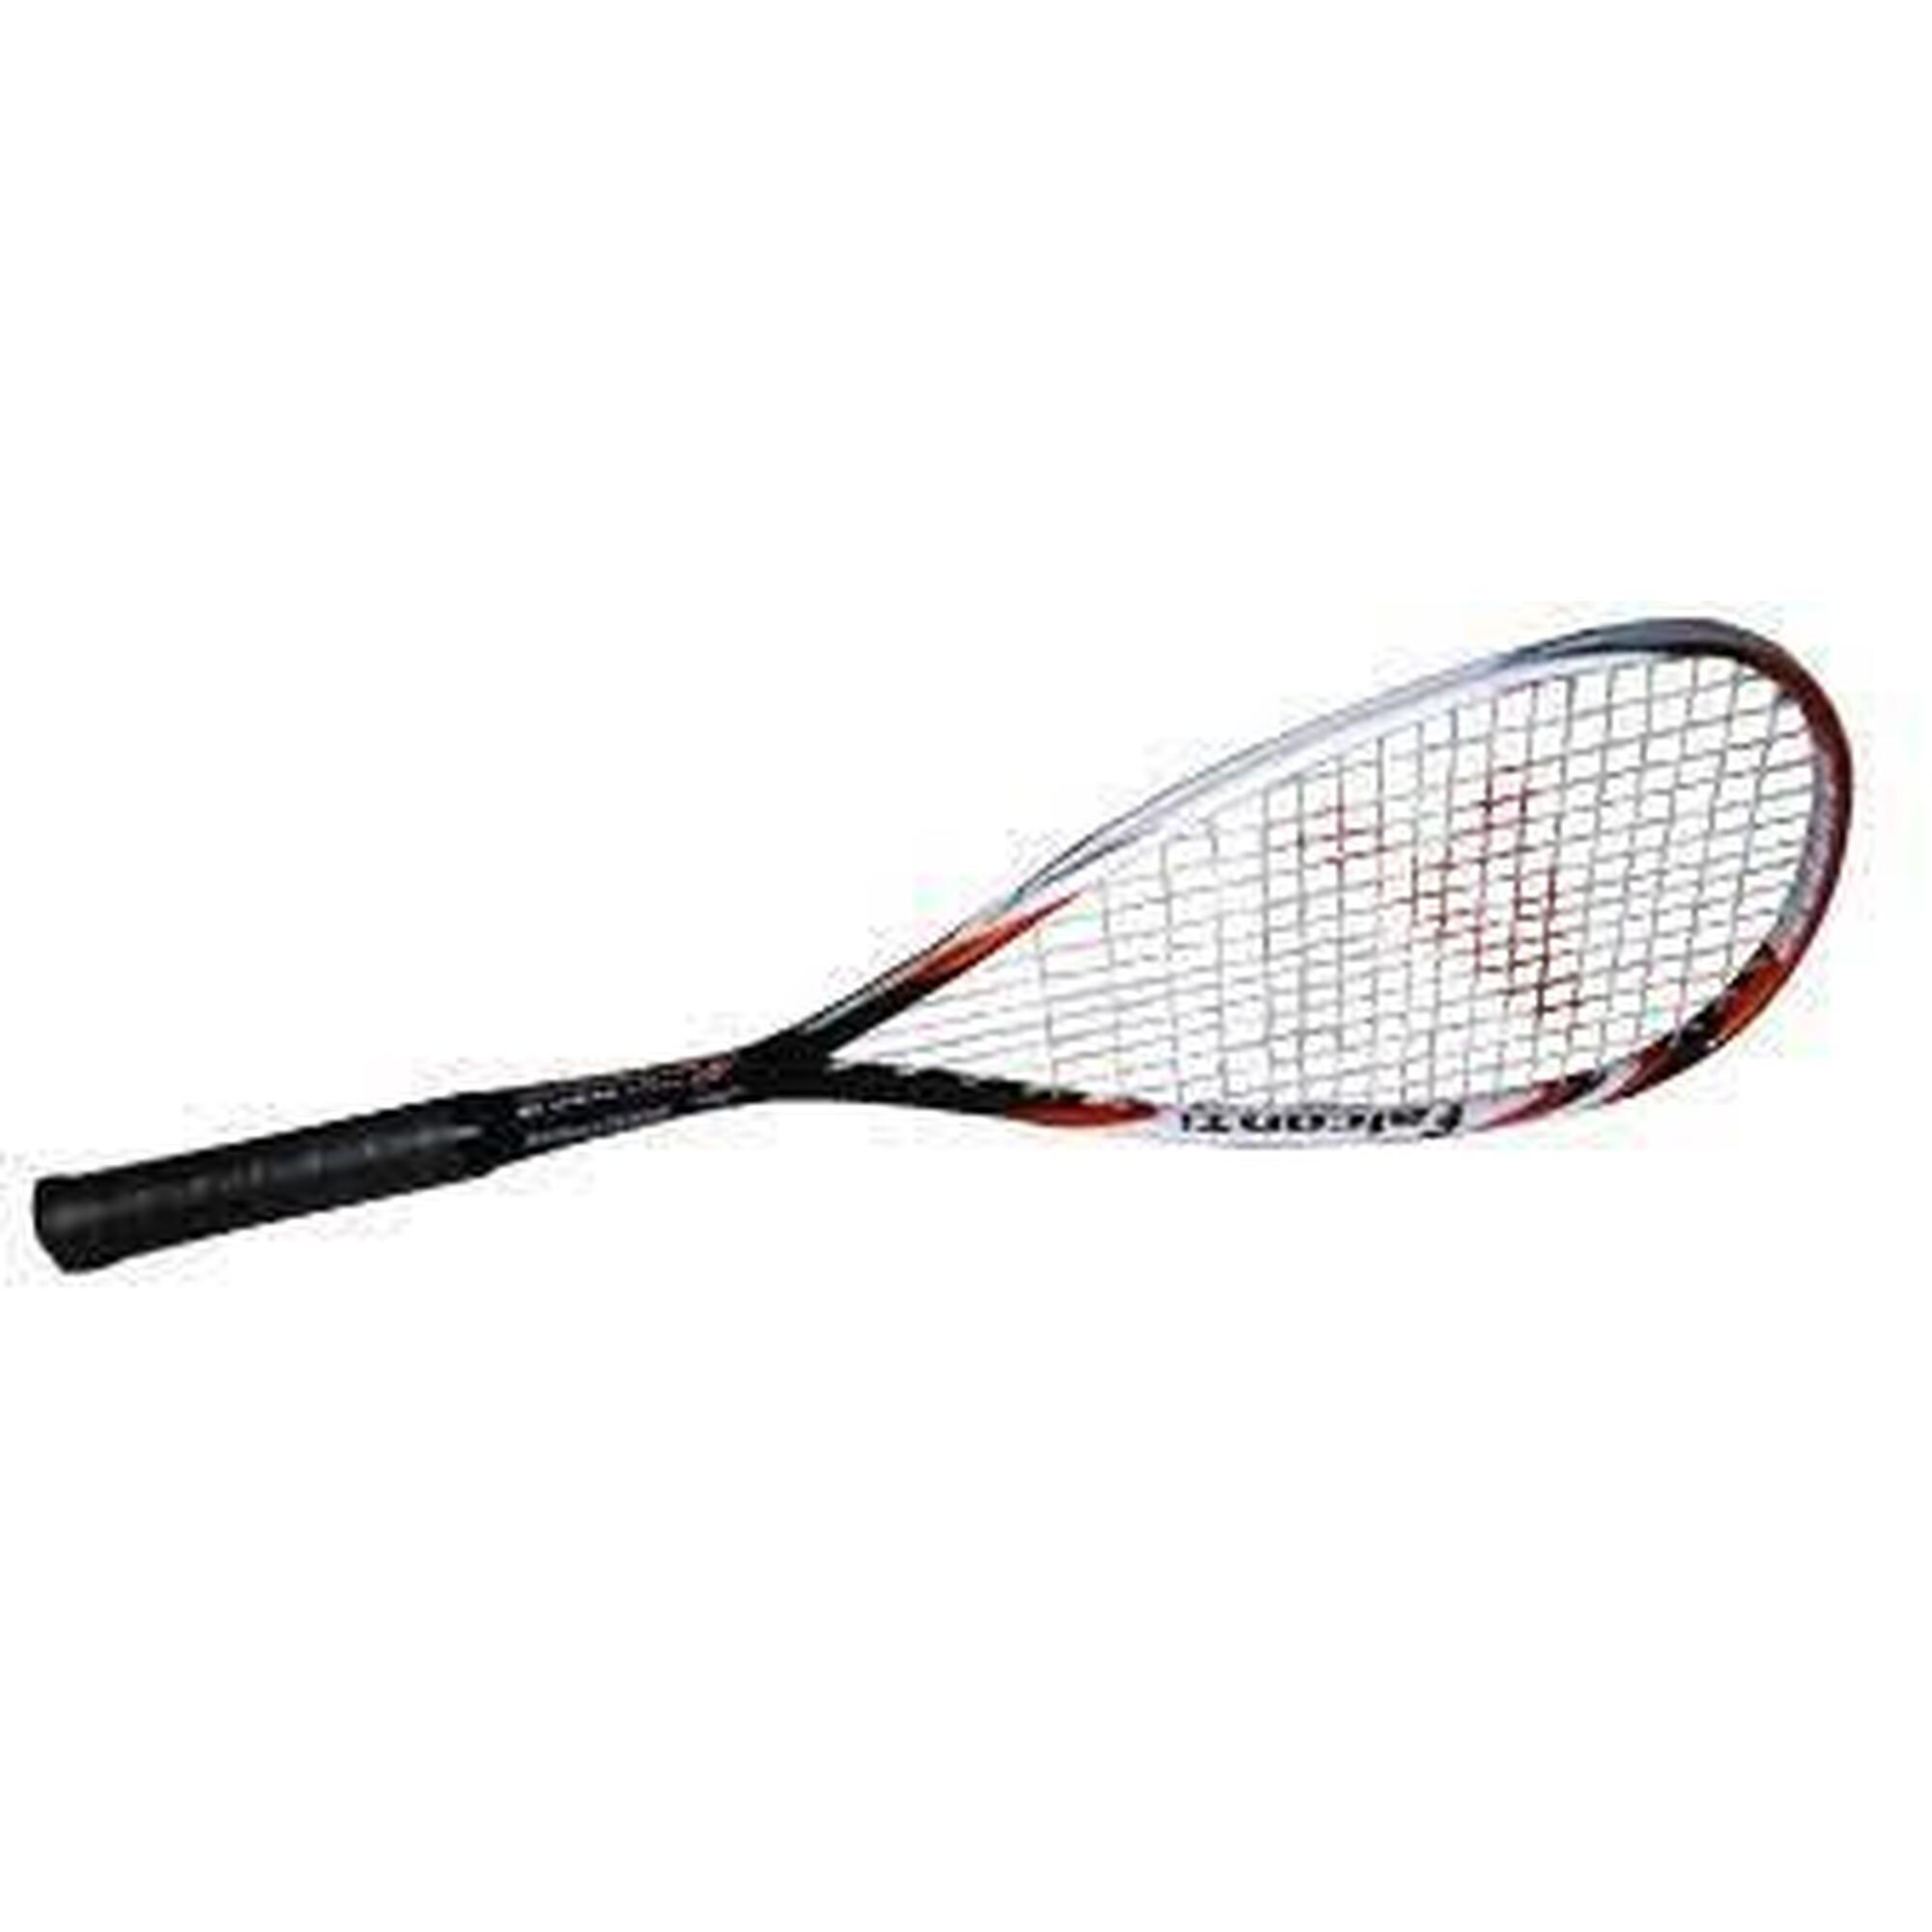 Pointfore Falcon Ti Unisex CarbonFiber Squash Racket- Black